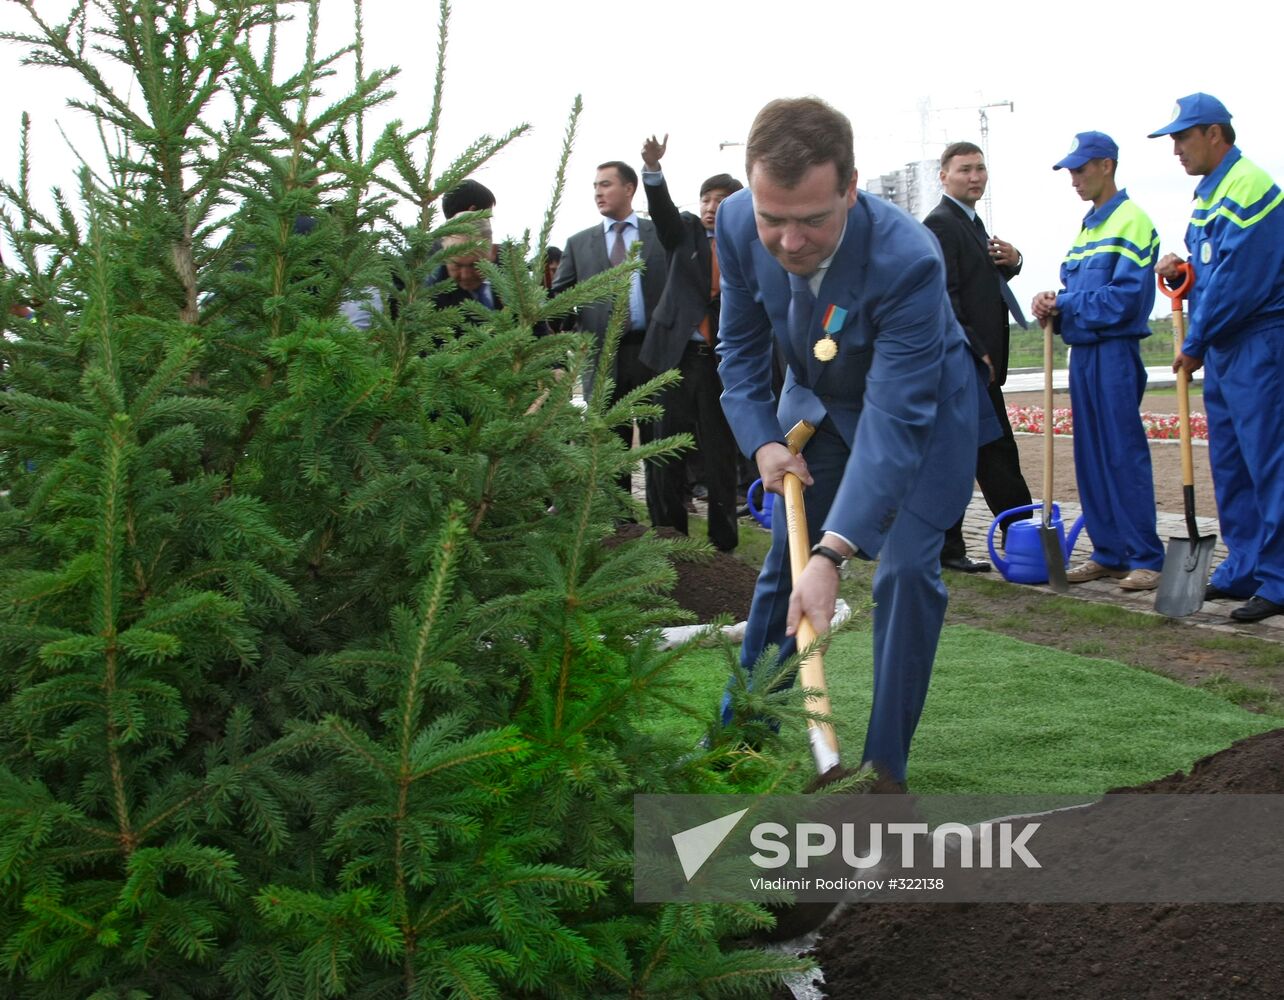 Dmitry Medvedev - Kazakhstan